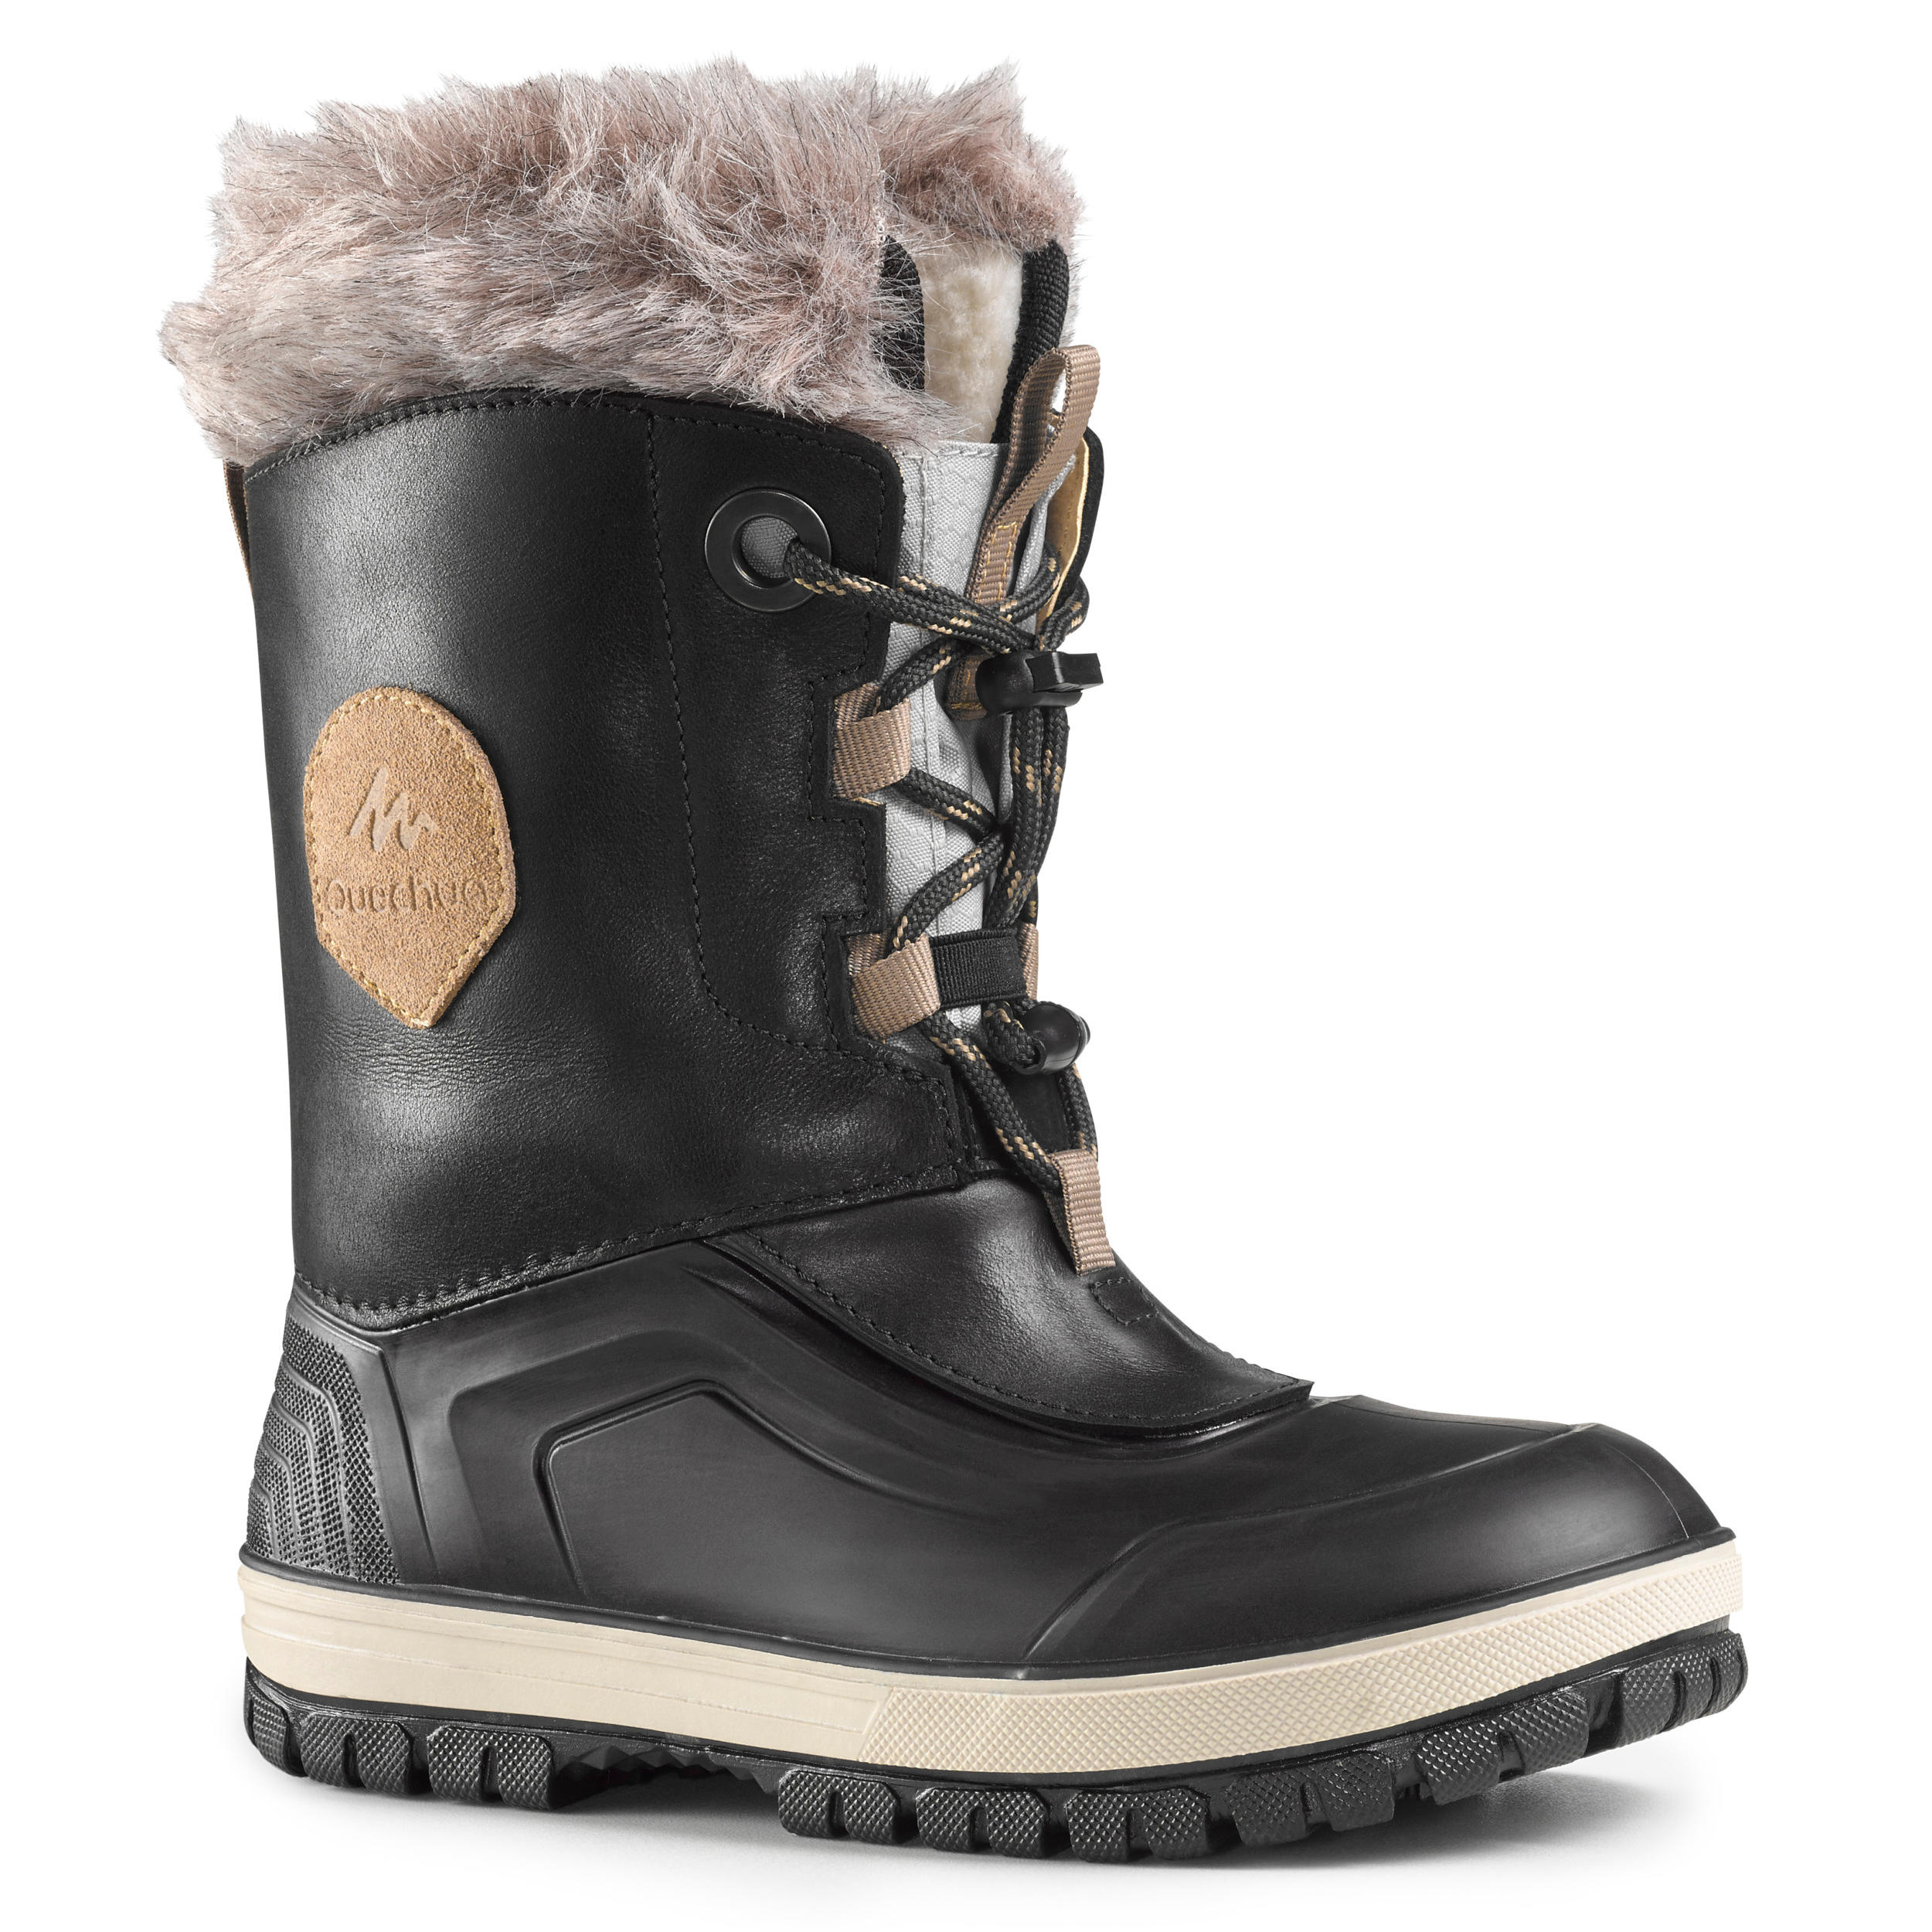 Snow Boots for Kids Girls Boys Outdoor Winter Waterproof Lightweight Warm Booties Shoes 